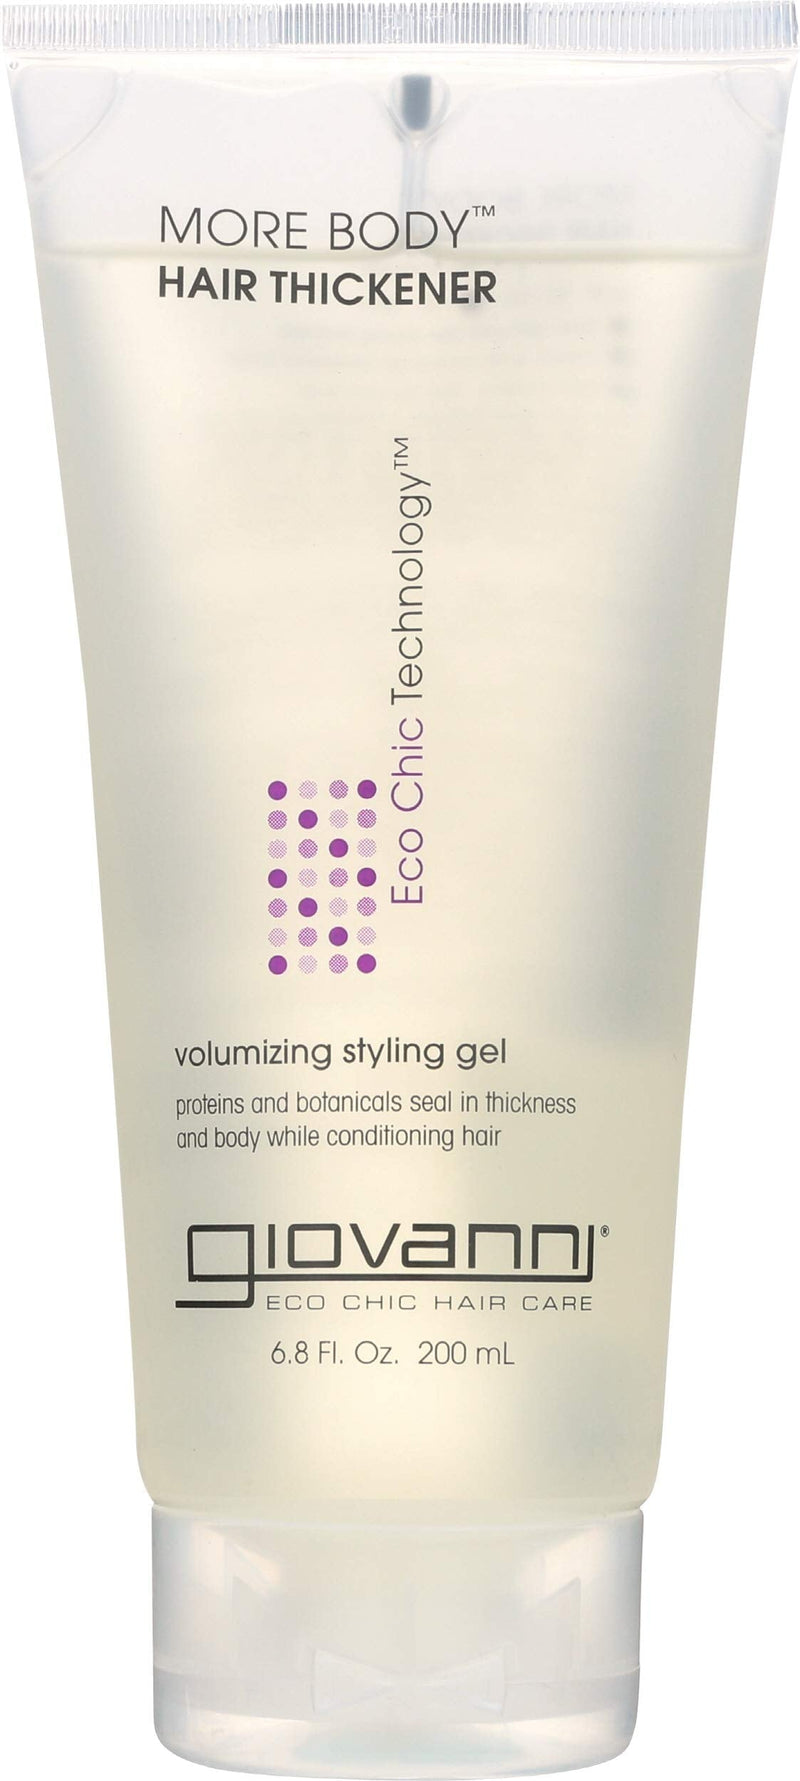 [Australia] - Giovanni: More Body Hair Thickener & Gel, 6.8 oz 